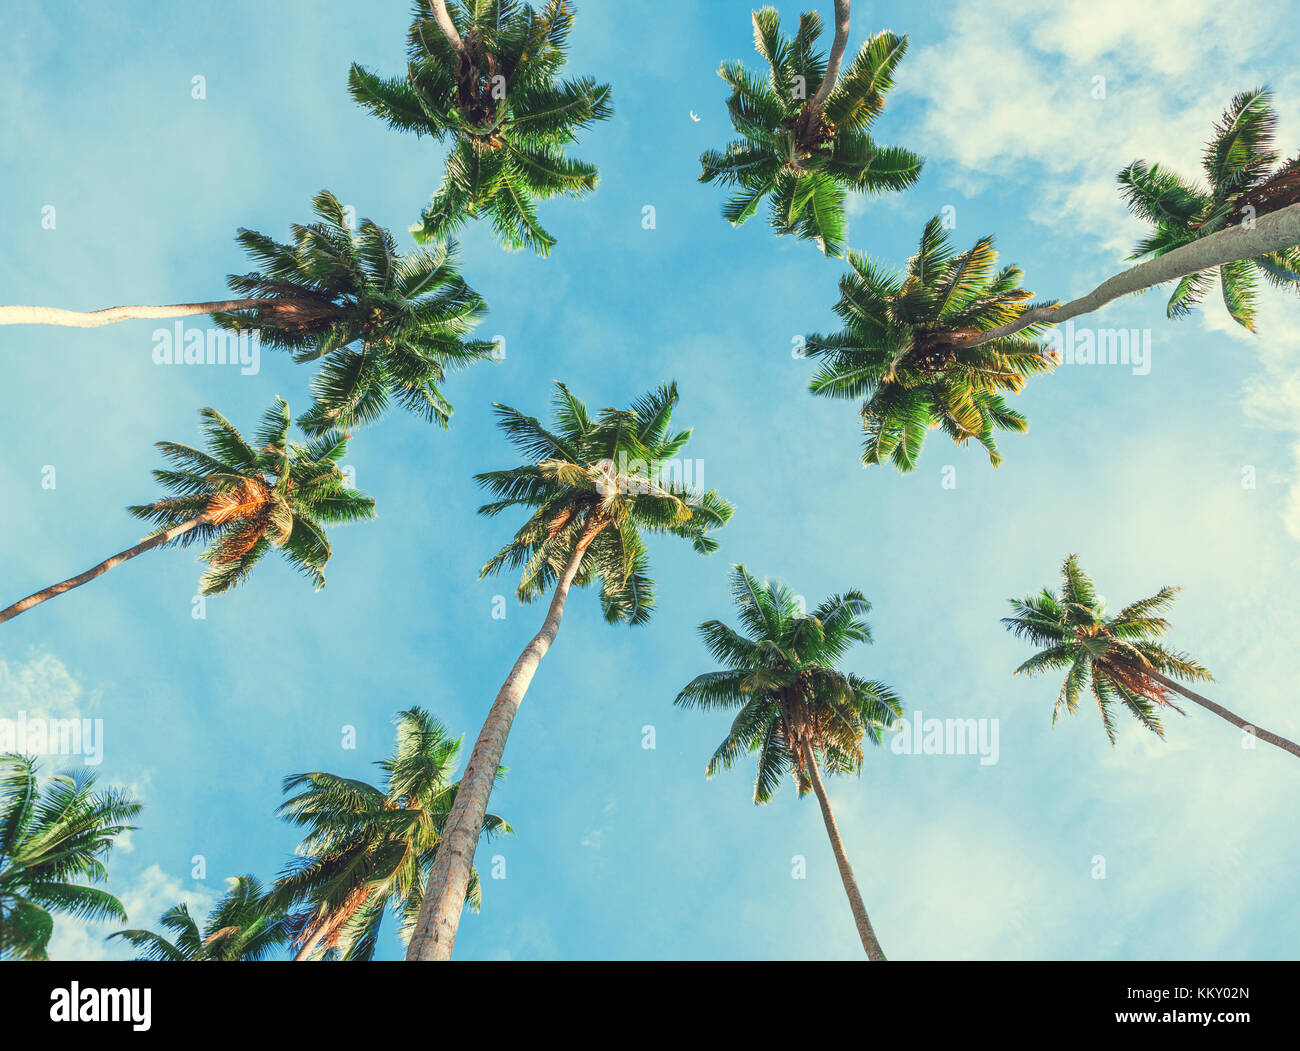 Kokosnuss Palmen am Himmel Hintergrund. Low Angle View. Getonten Bild Stockfoto